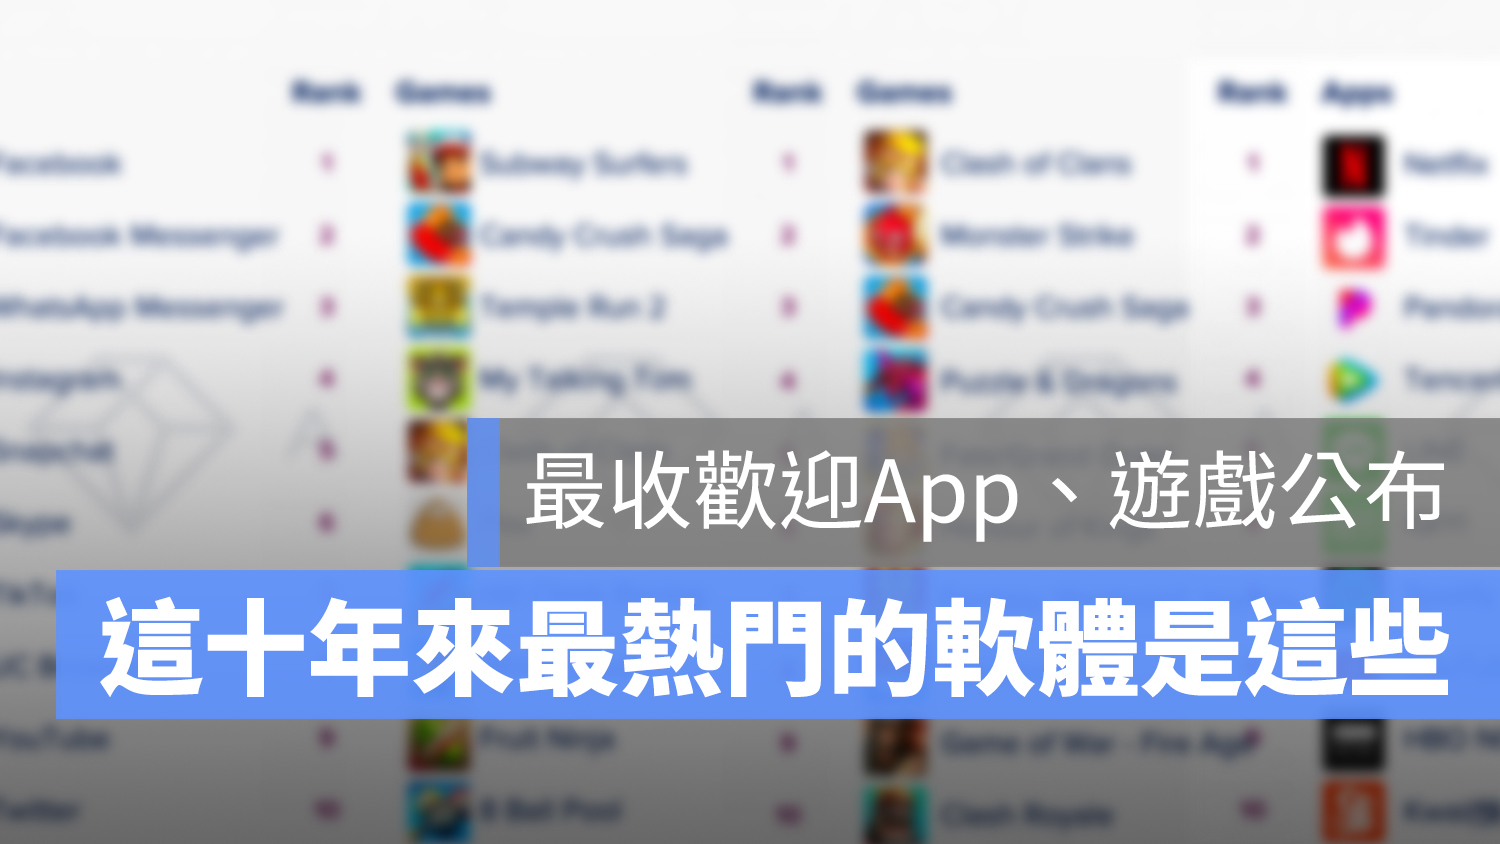 App 榜單 遊戲 最多人下載